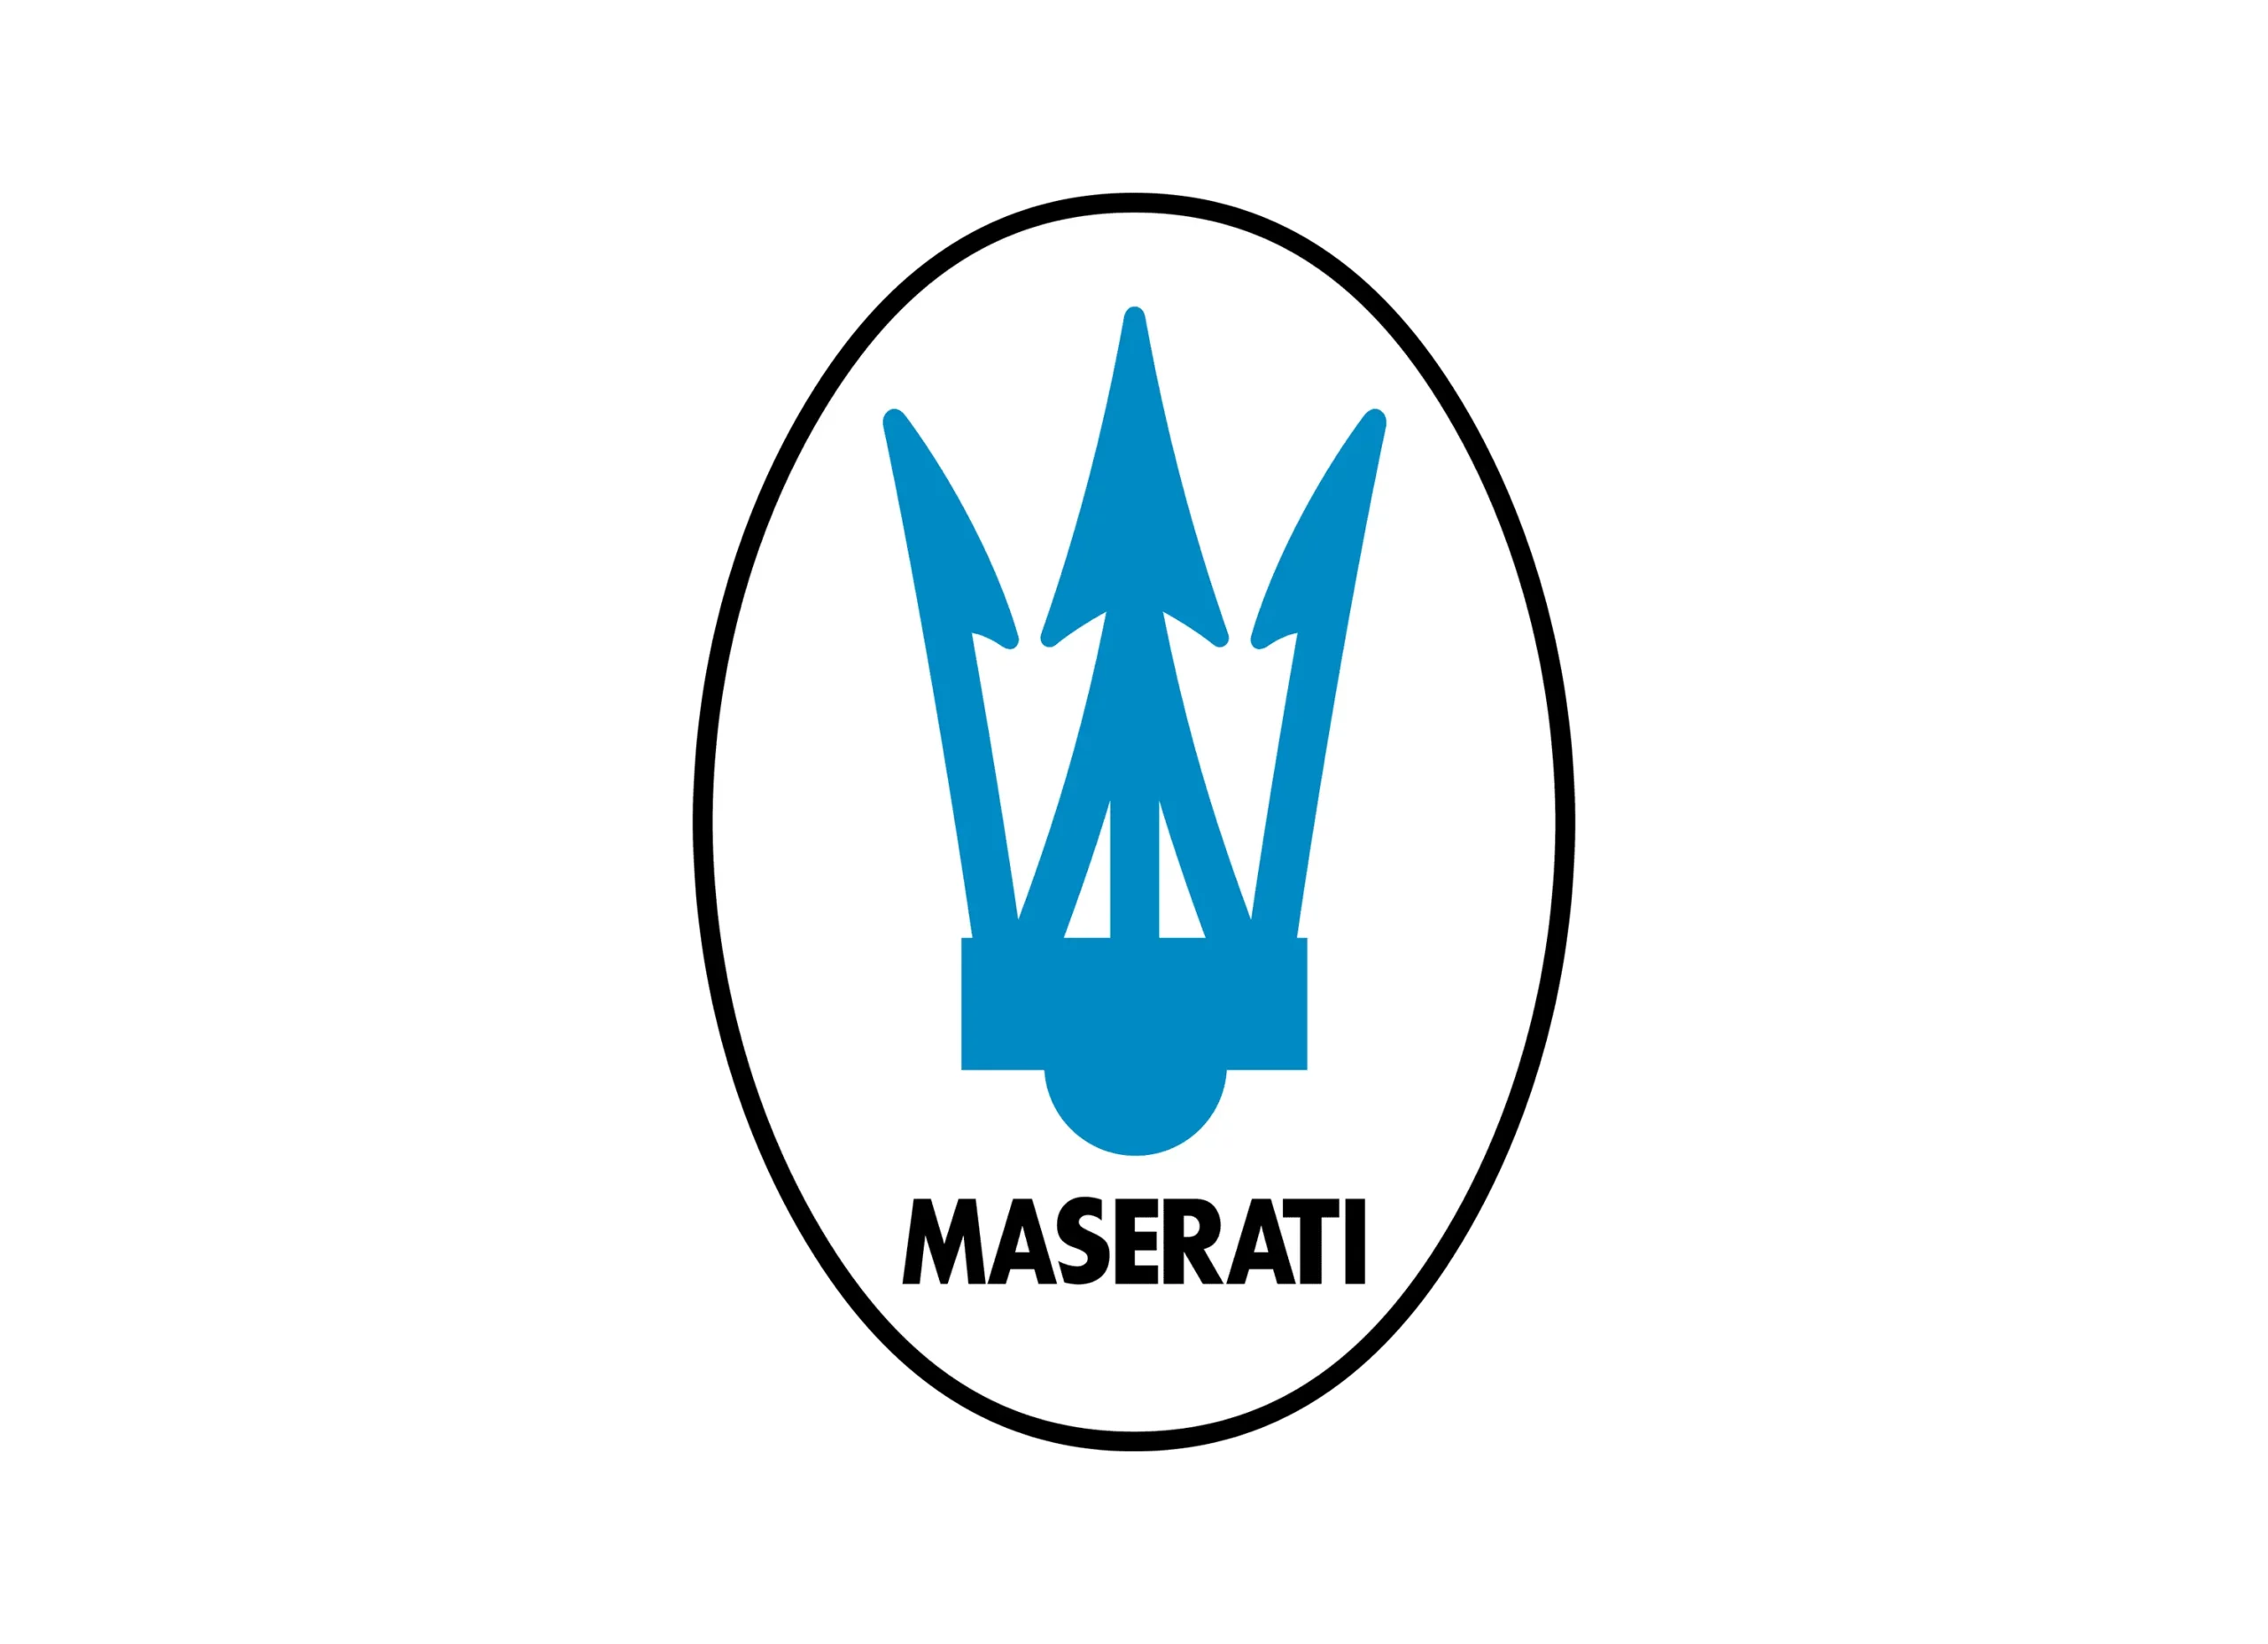 Maserati logo 1983-1985